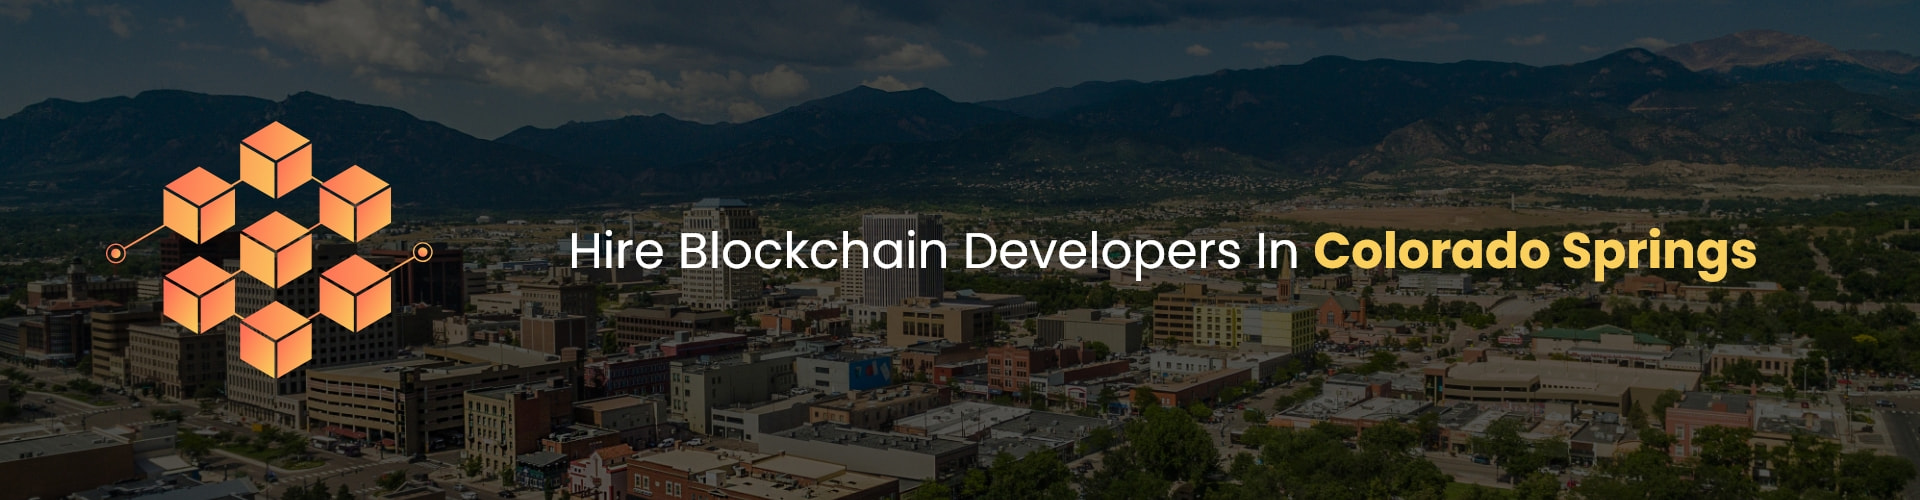 hire blockchain developers in colorado springs